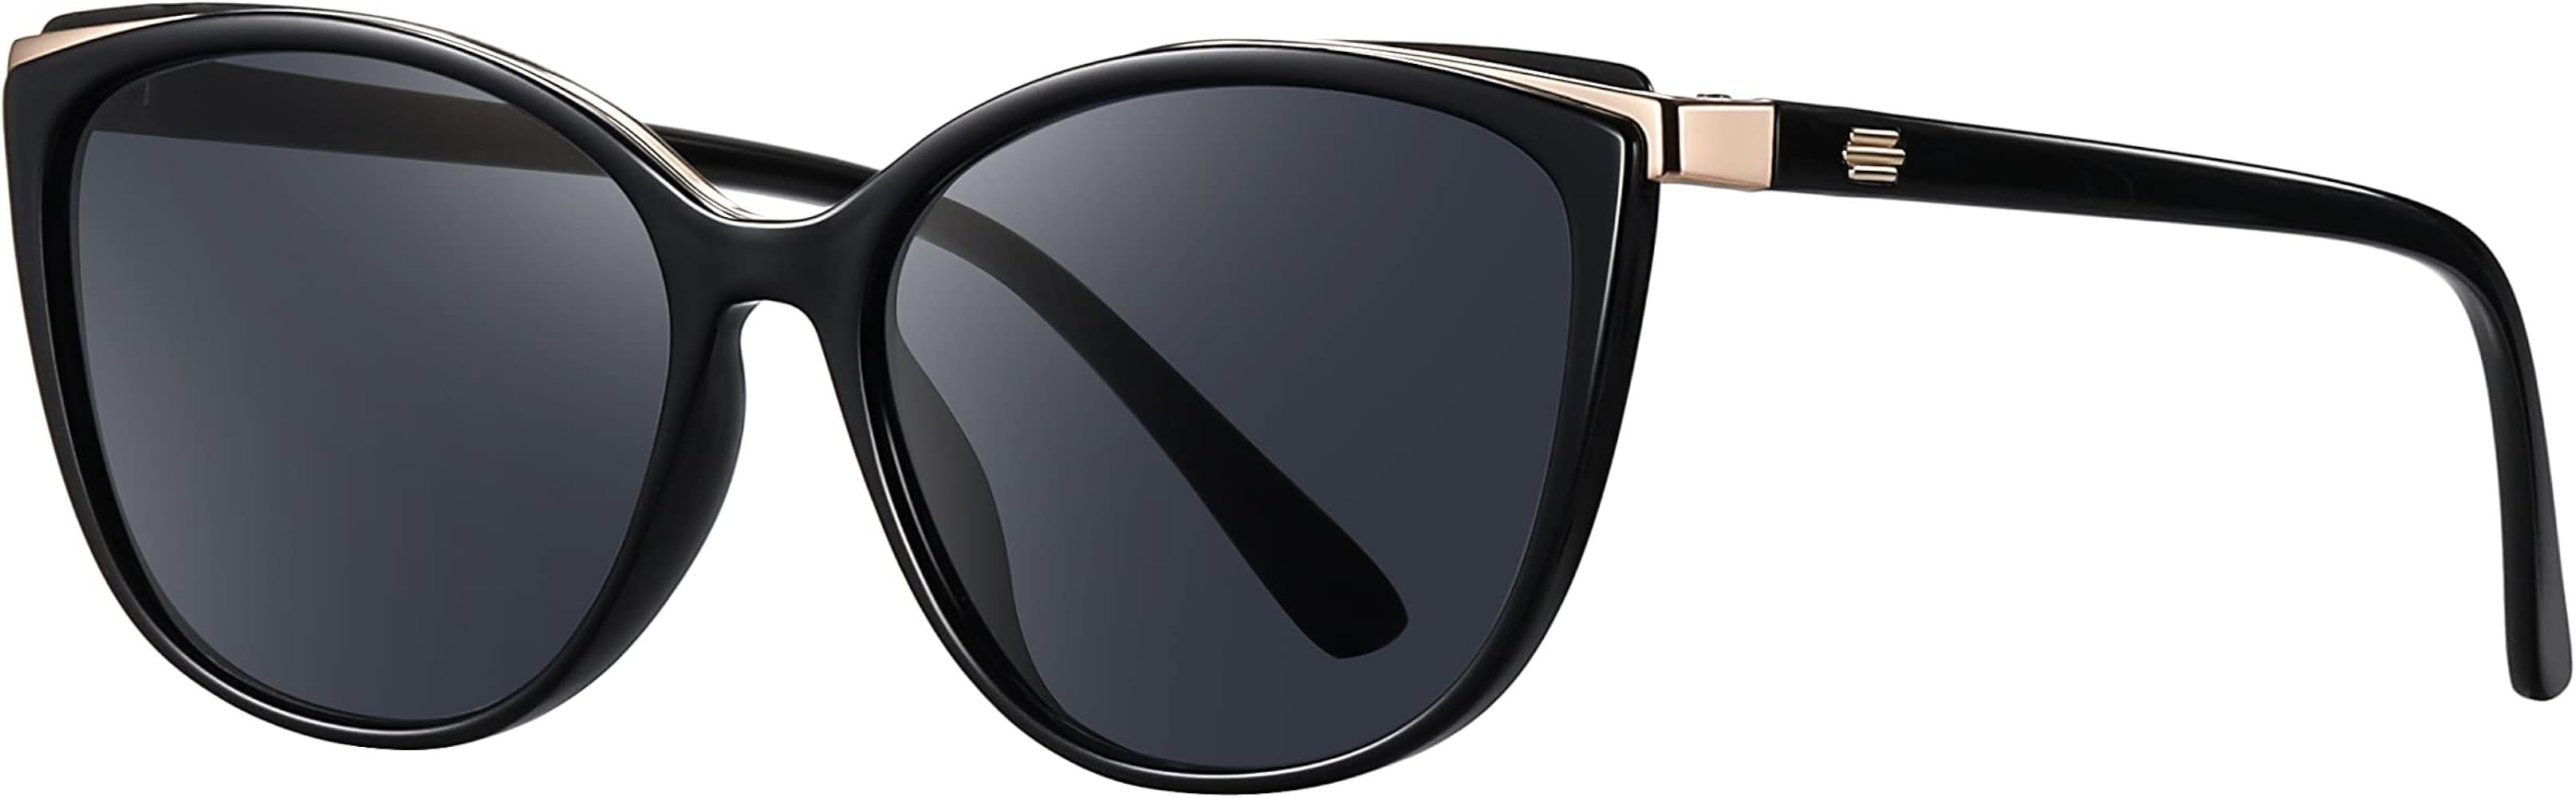 Colrea Trendy Cat Eye Sunglasses for Women Fashion Cateye UV400 Protection Glasses CL22017 | Amazon (US)